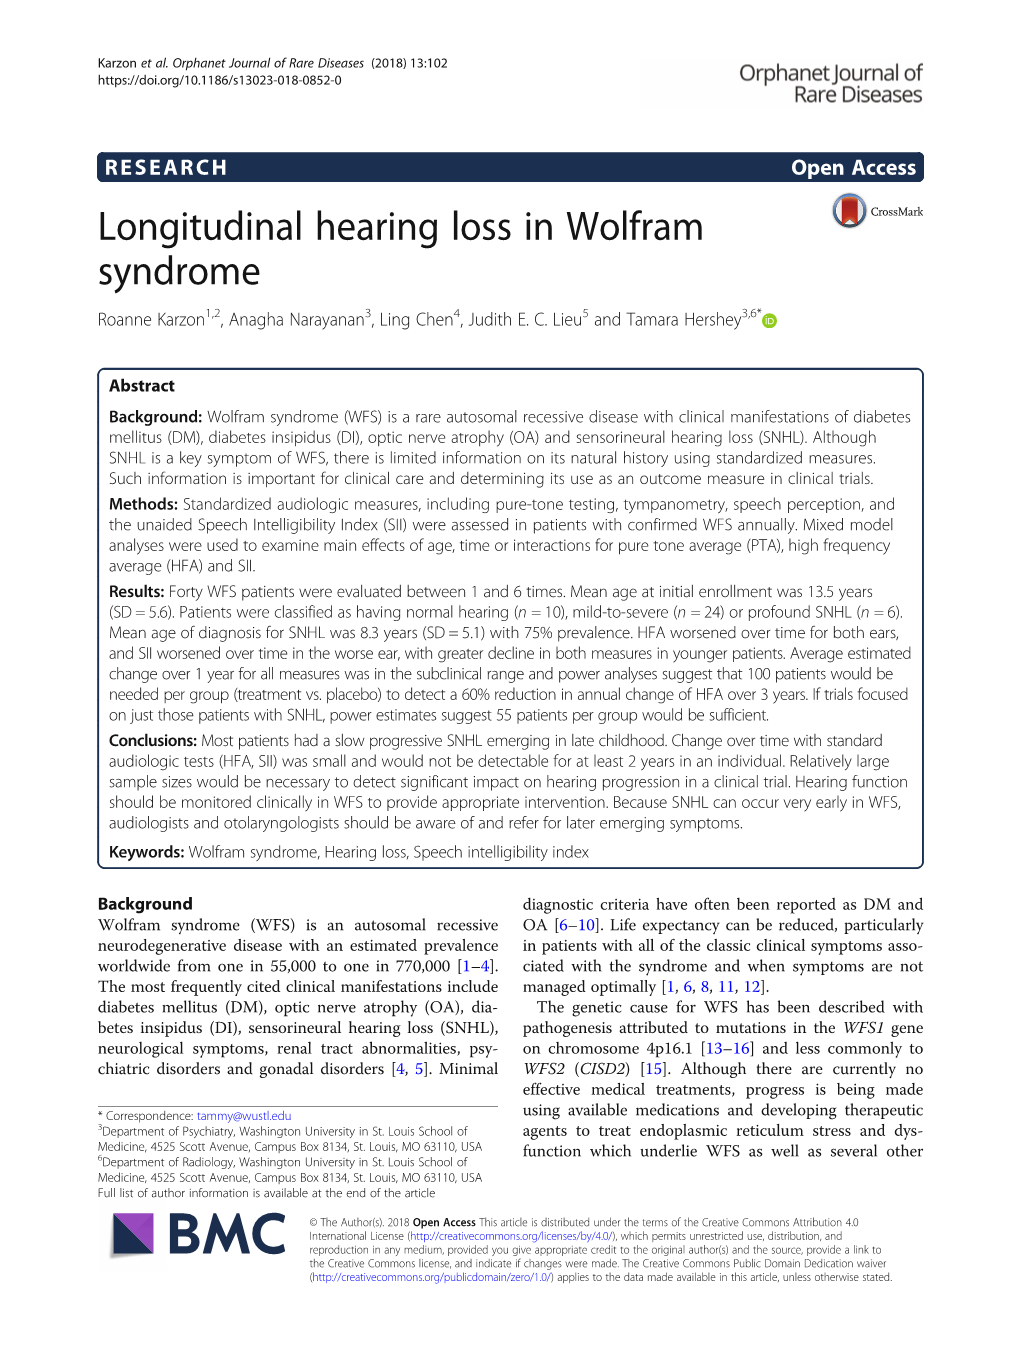 Longitudinal Hearing Loss in Wolfram Syndrome Roanne Karzon1,2, Anagha Narayanan3, Ling Chen4, Judith E